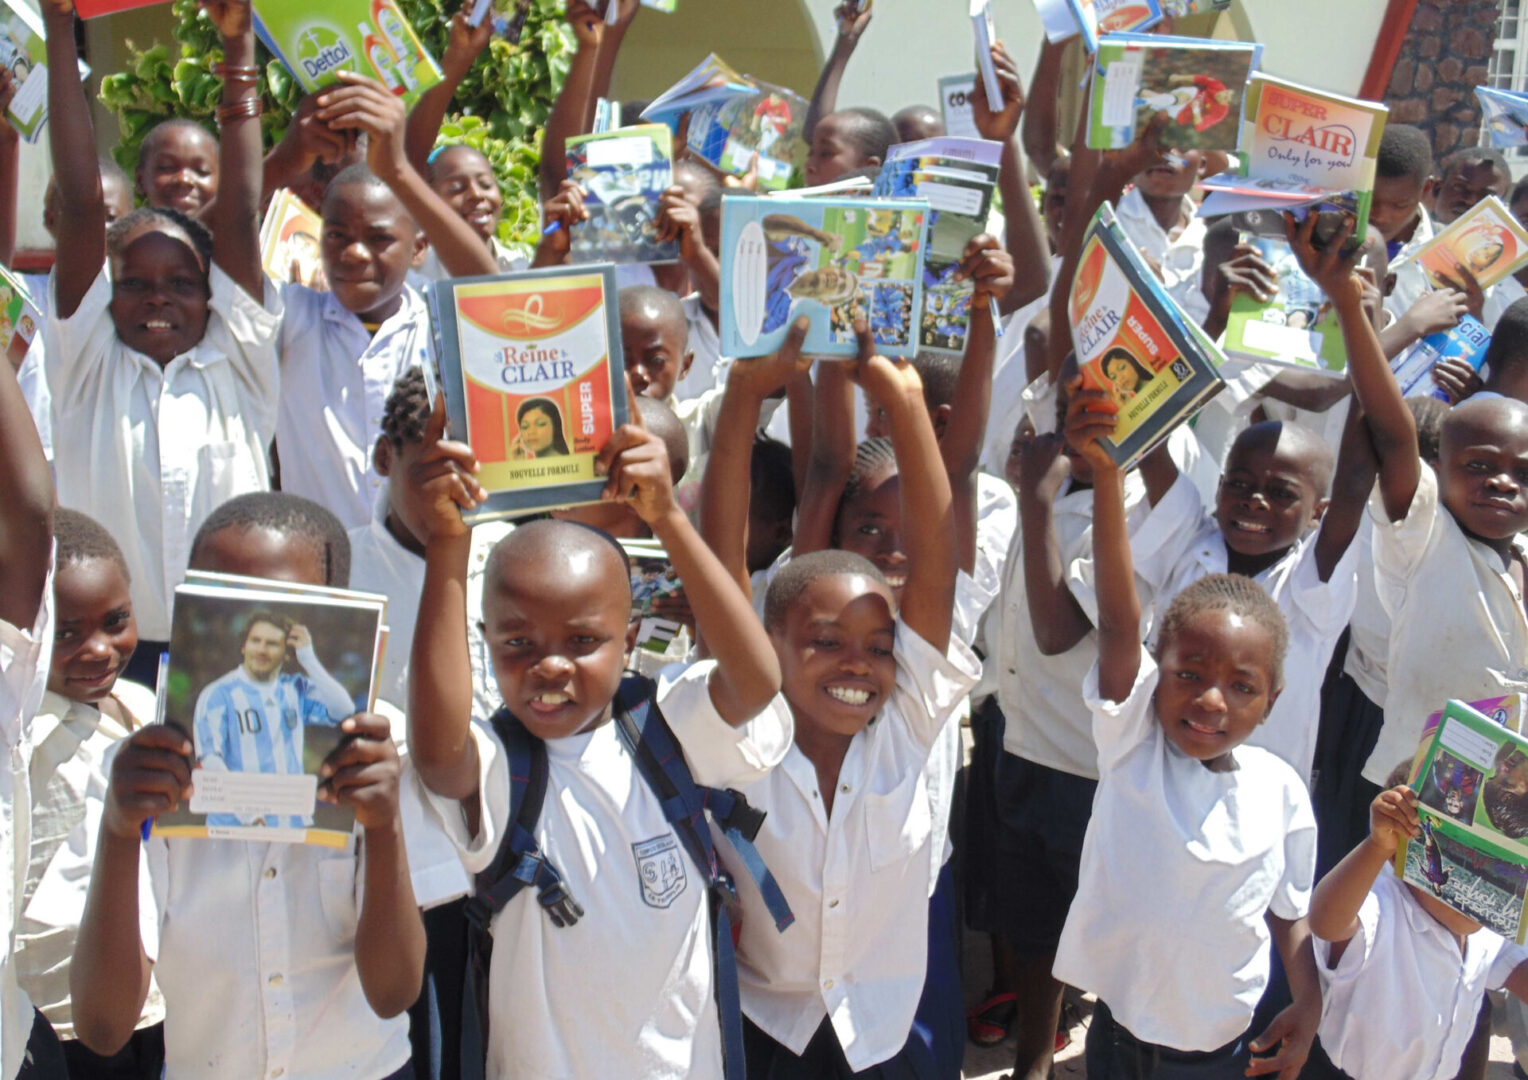 Kids in uniform raising their books